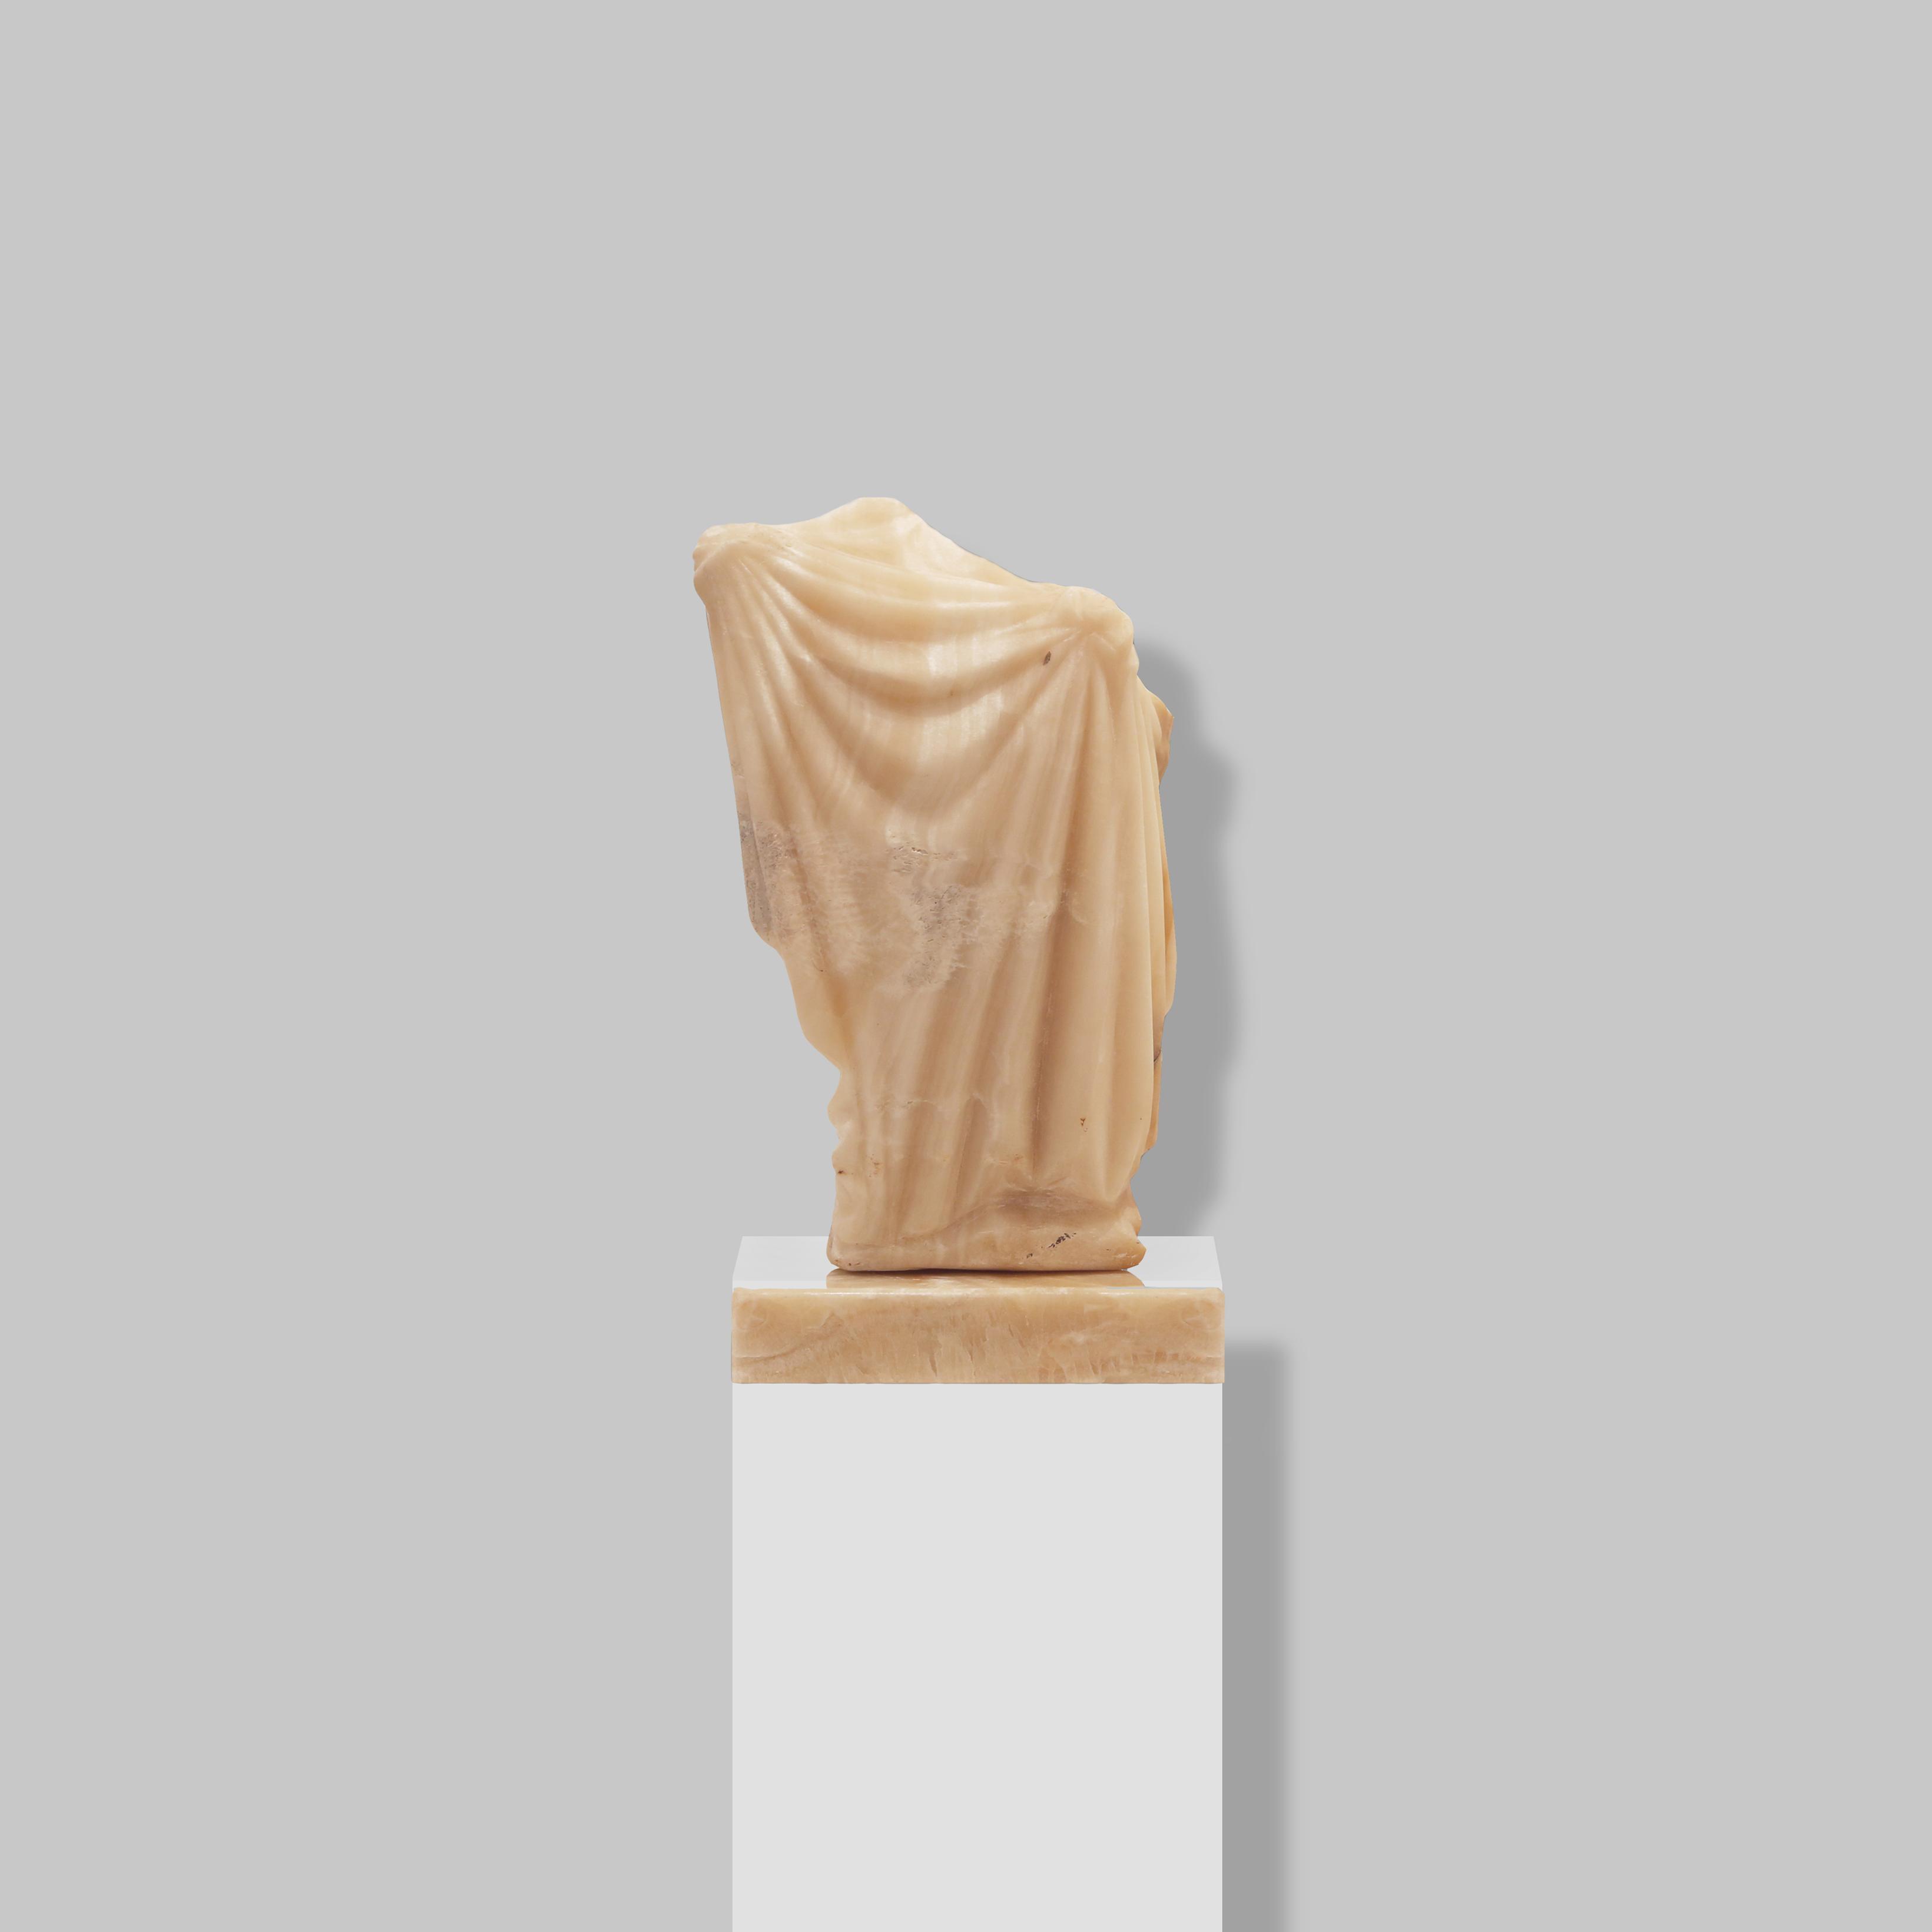 Les Nymphéas, 2017
Sculpture en marbre
60 x 74 cm